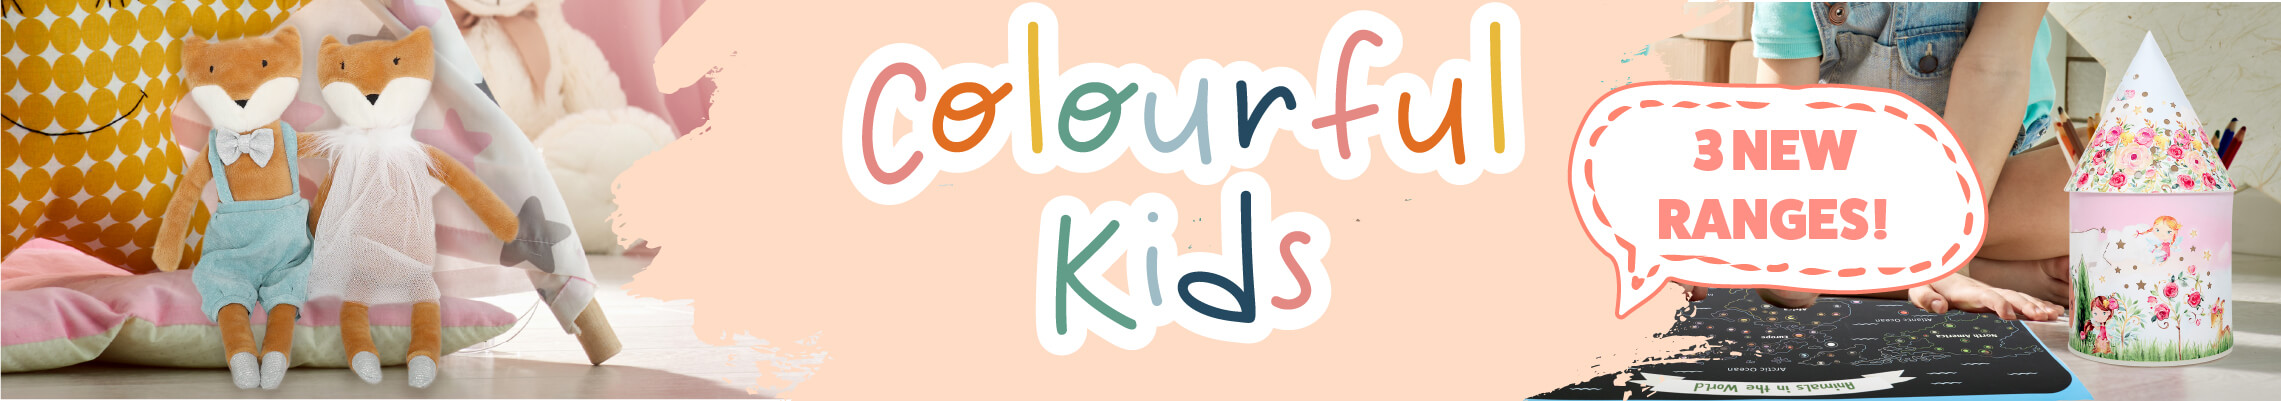 Colourful Kids Plush Toys